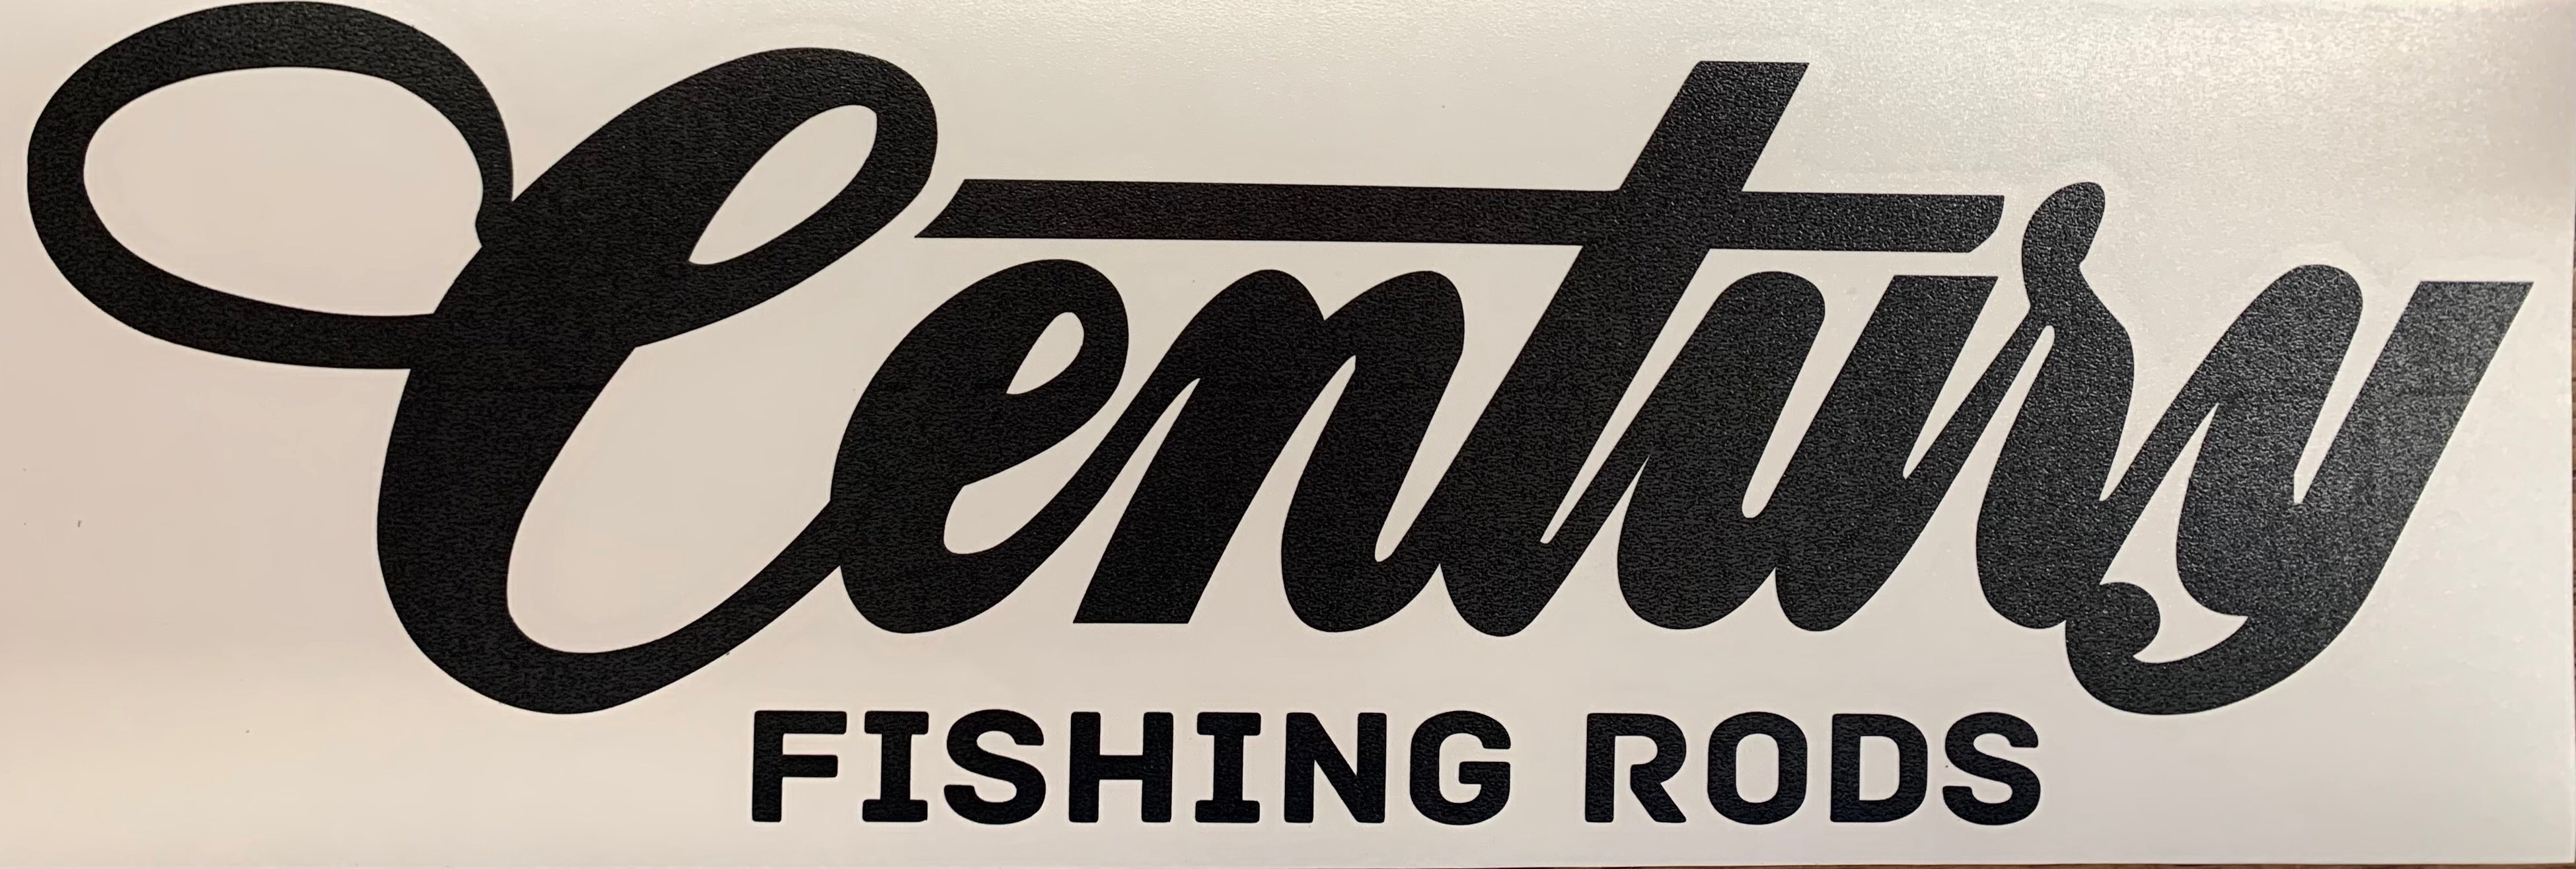 Custom Fishing Rod Decals & Decorative Stickers